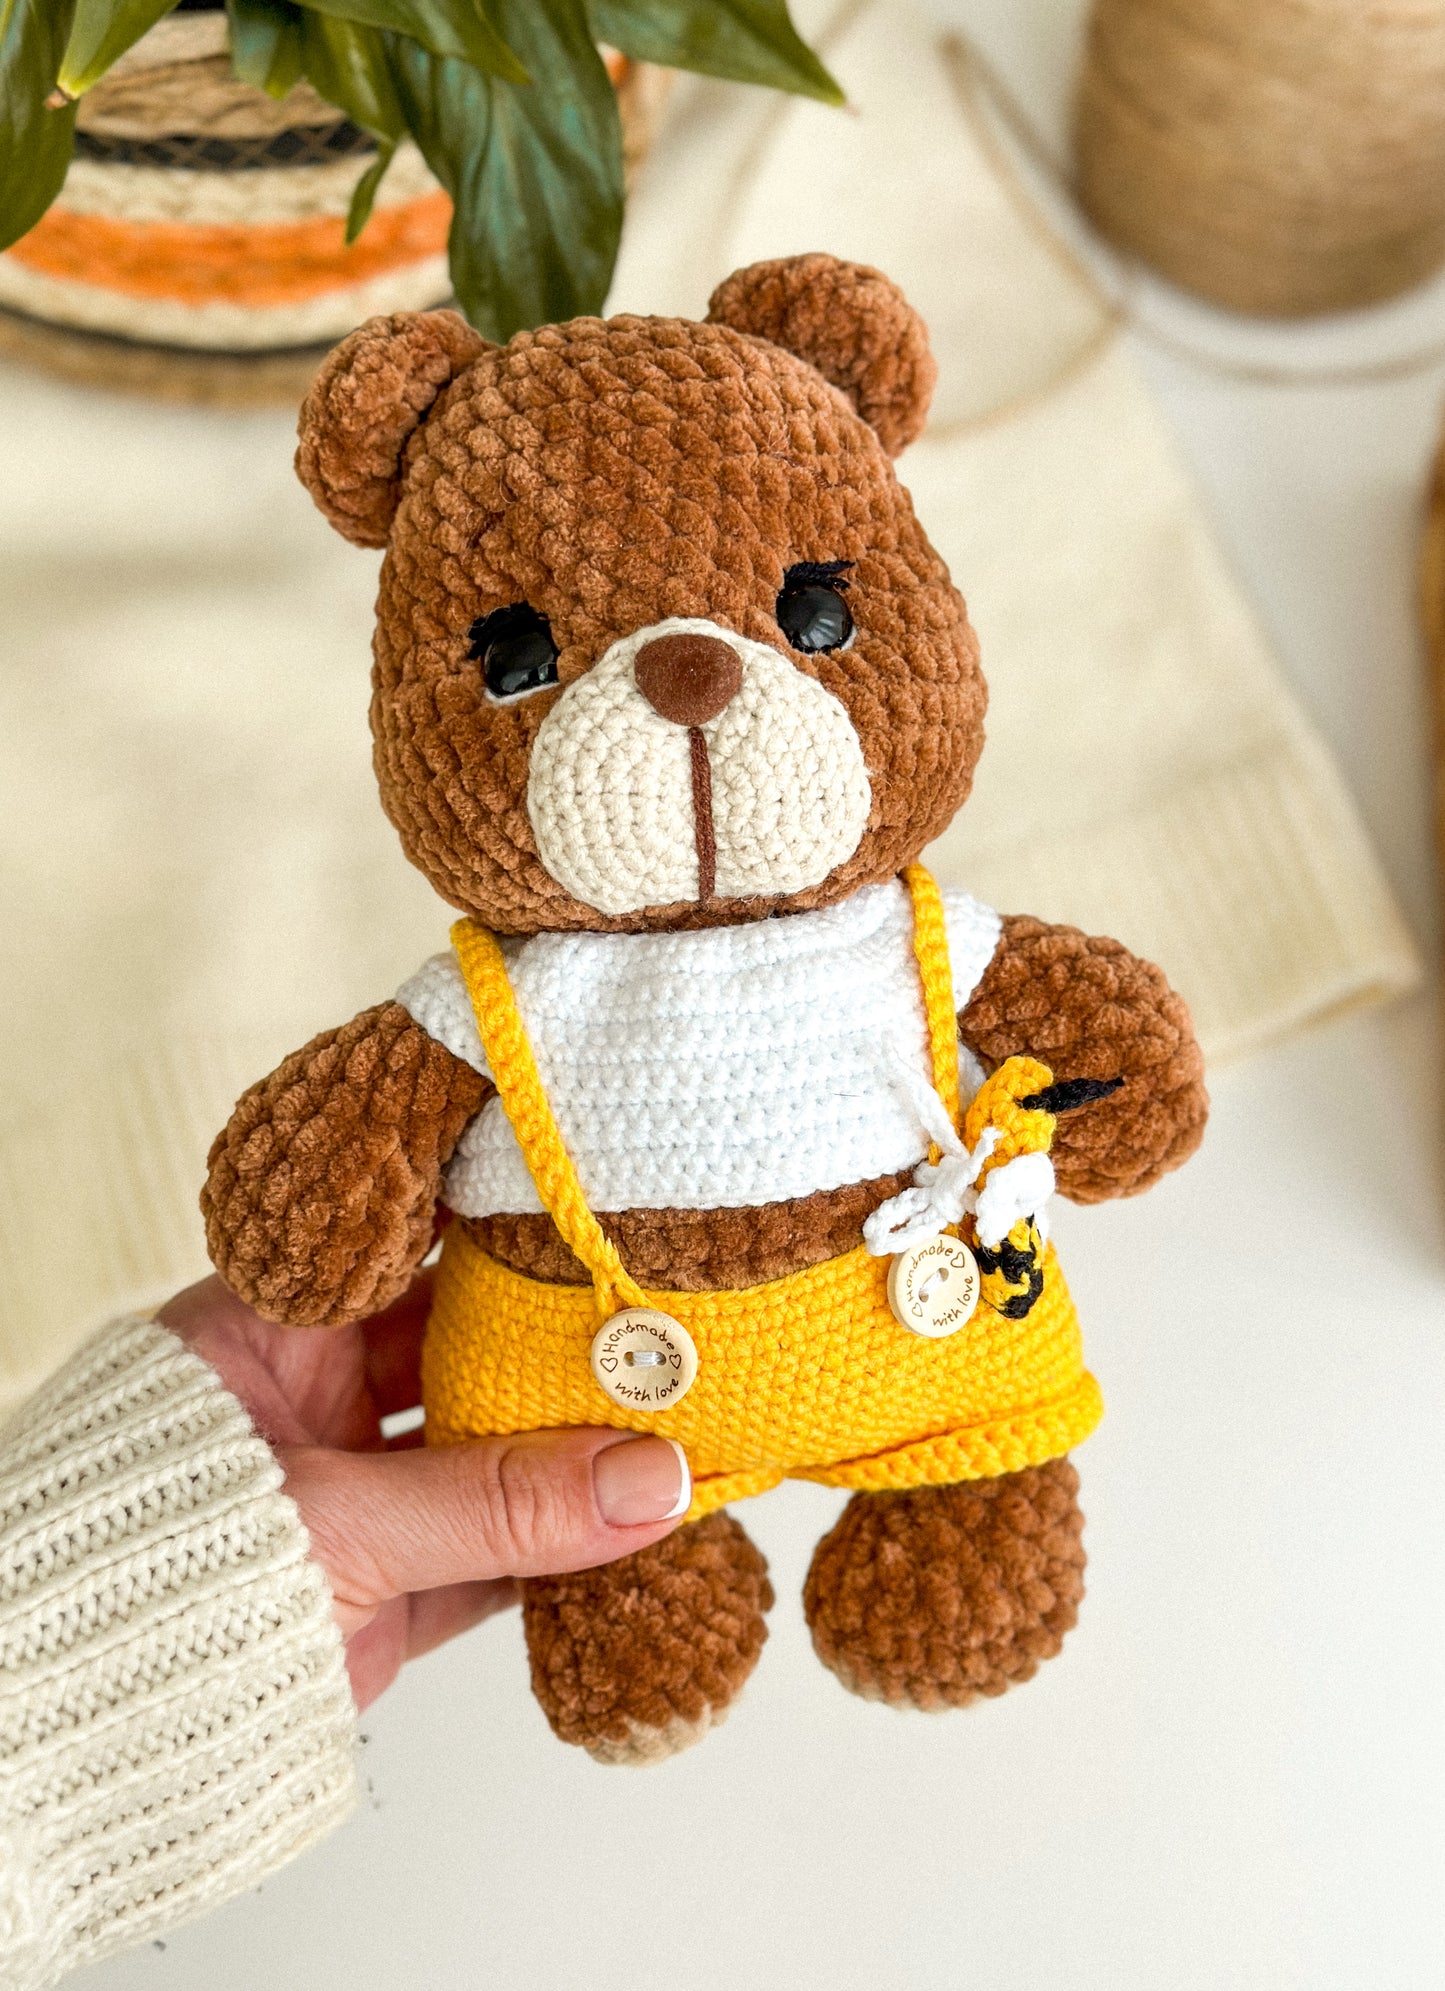 Handmade crochet Teddy Bear in Overalls